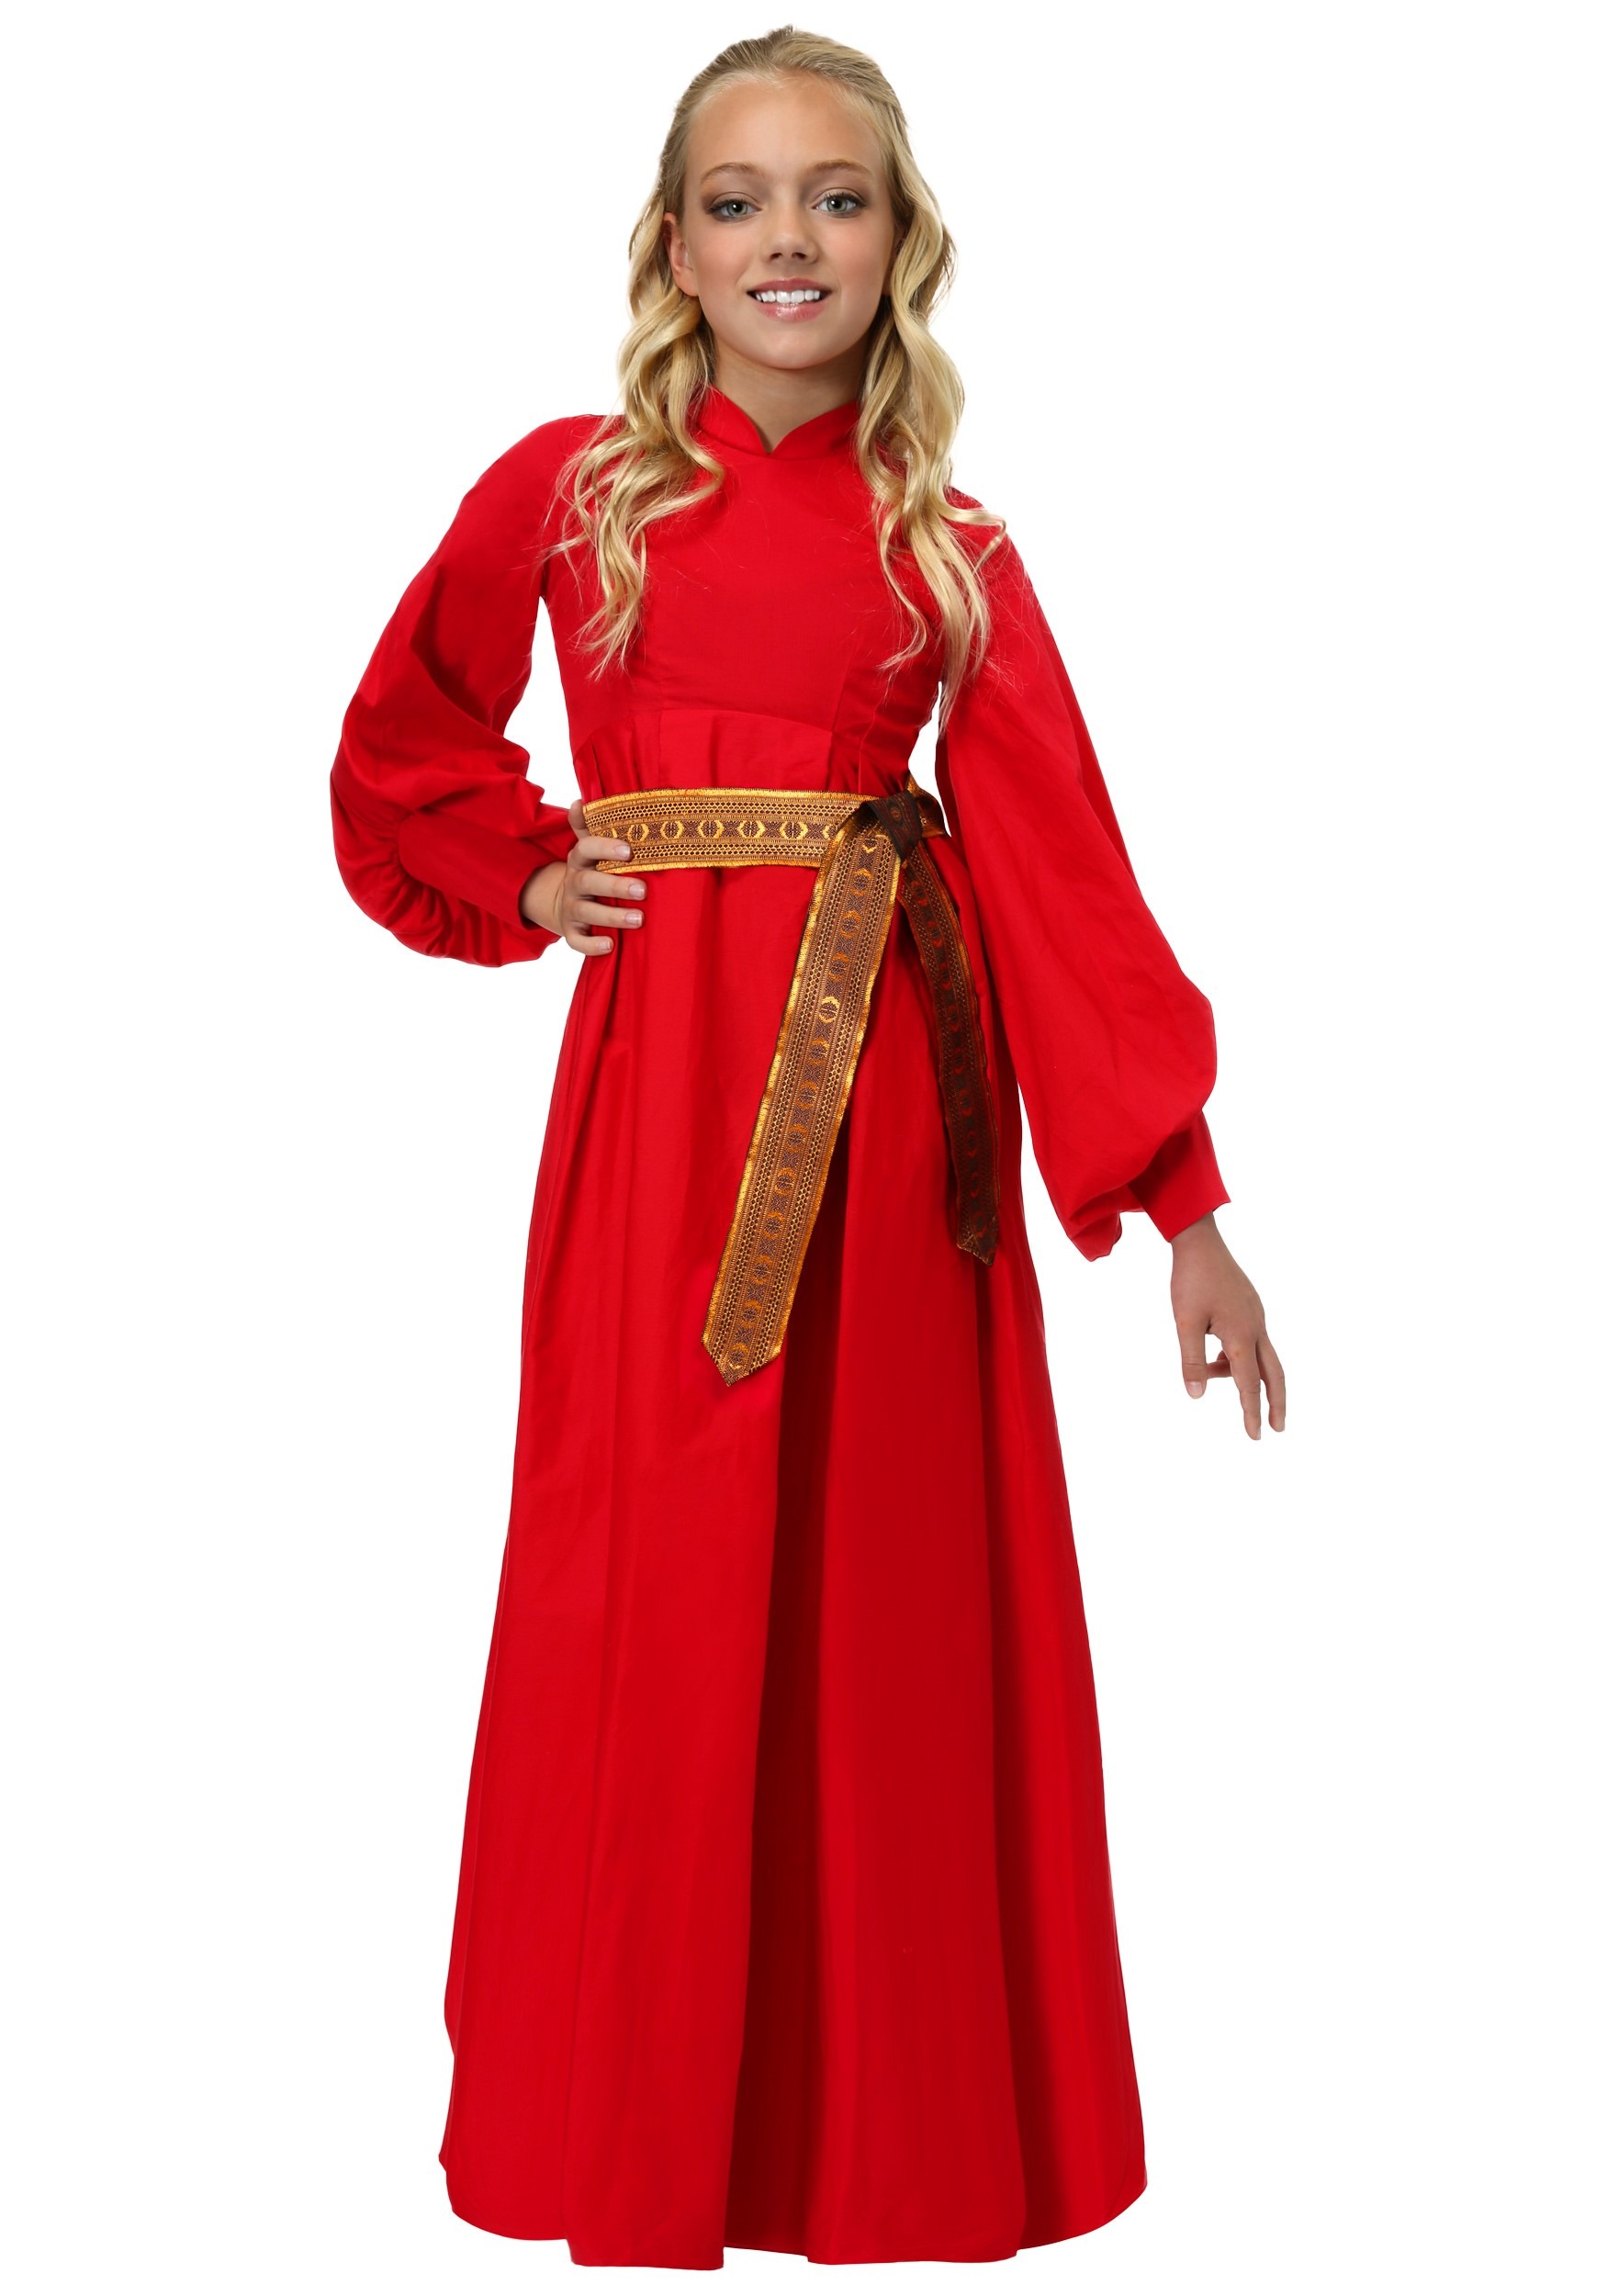 Photos - Fancy Dress Winsun Dress FUN Costumes Buttercup Peasant Dress Costume for Girls Red 